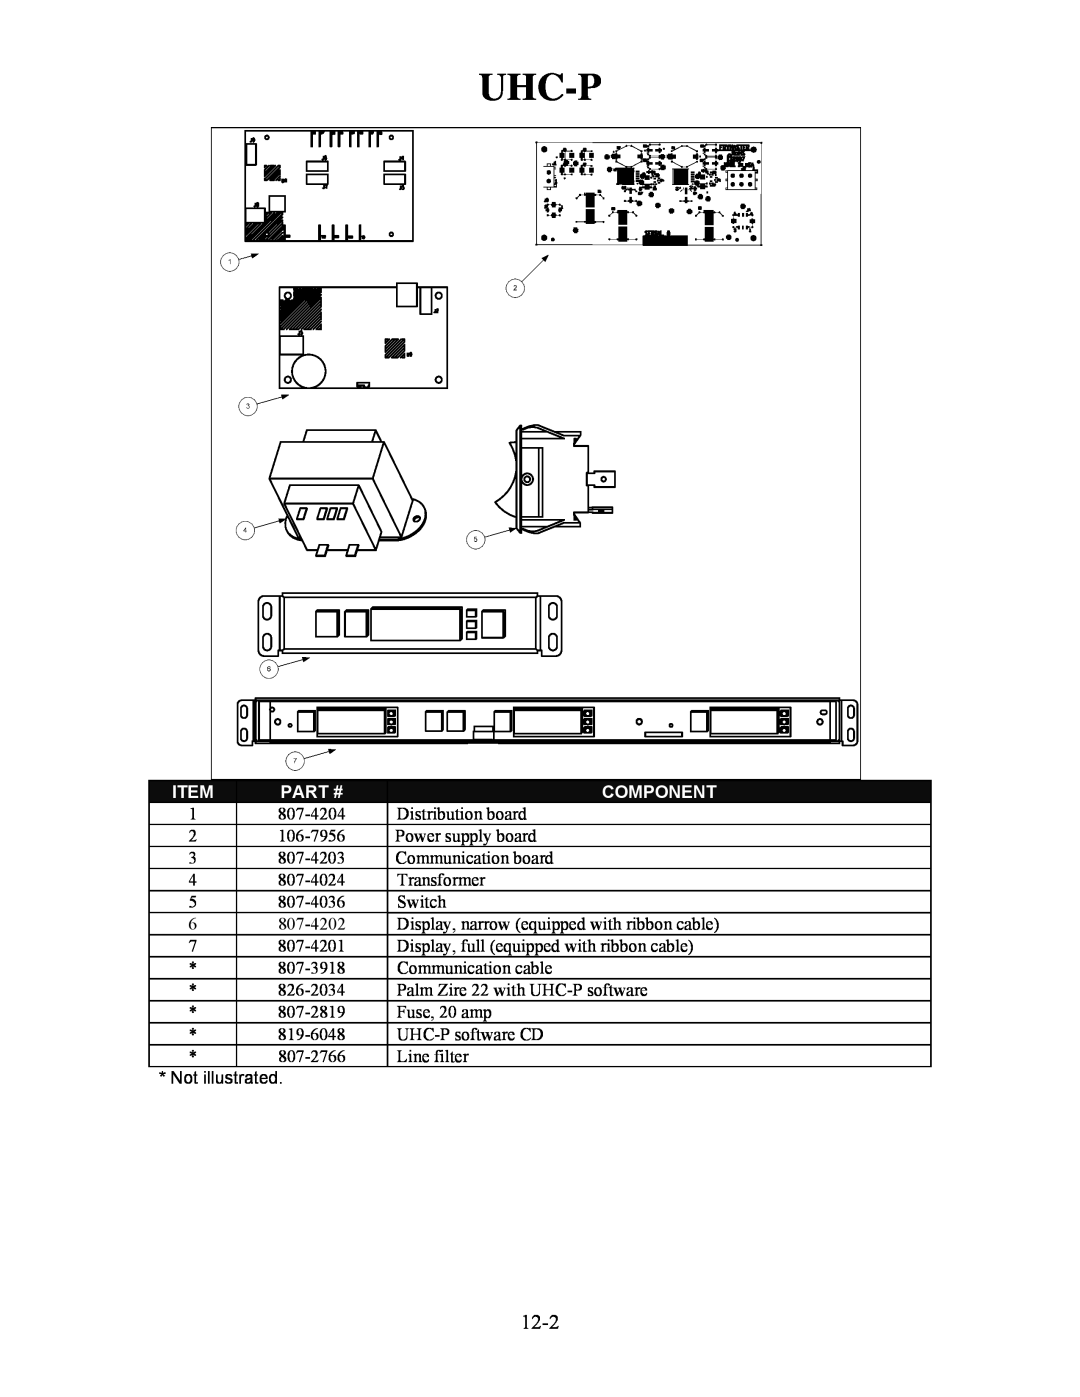 Frymaster H55 manual 12-2, Uhc-P, Part #, Component 